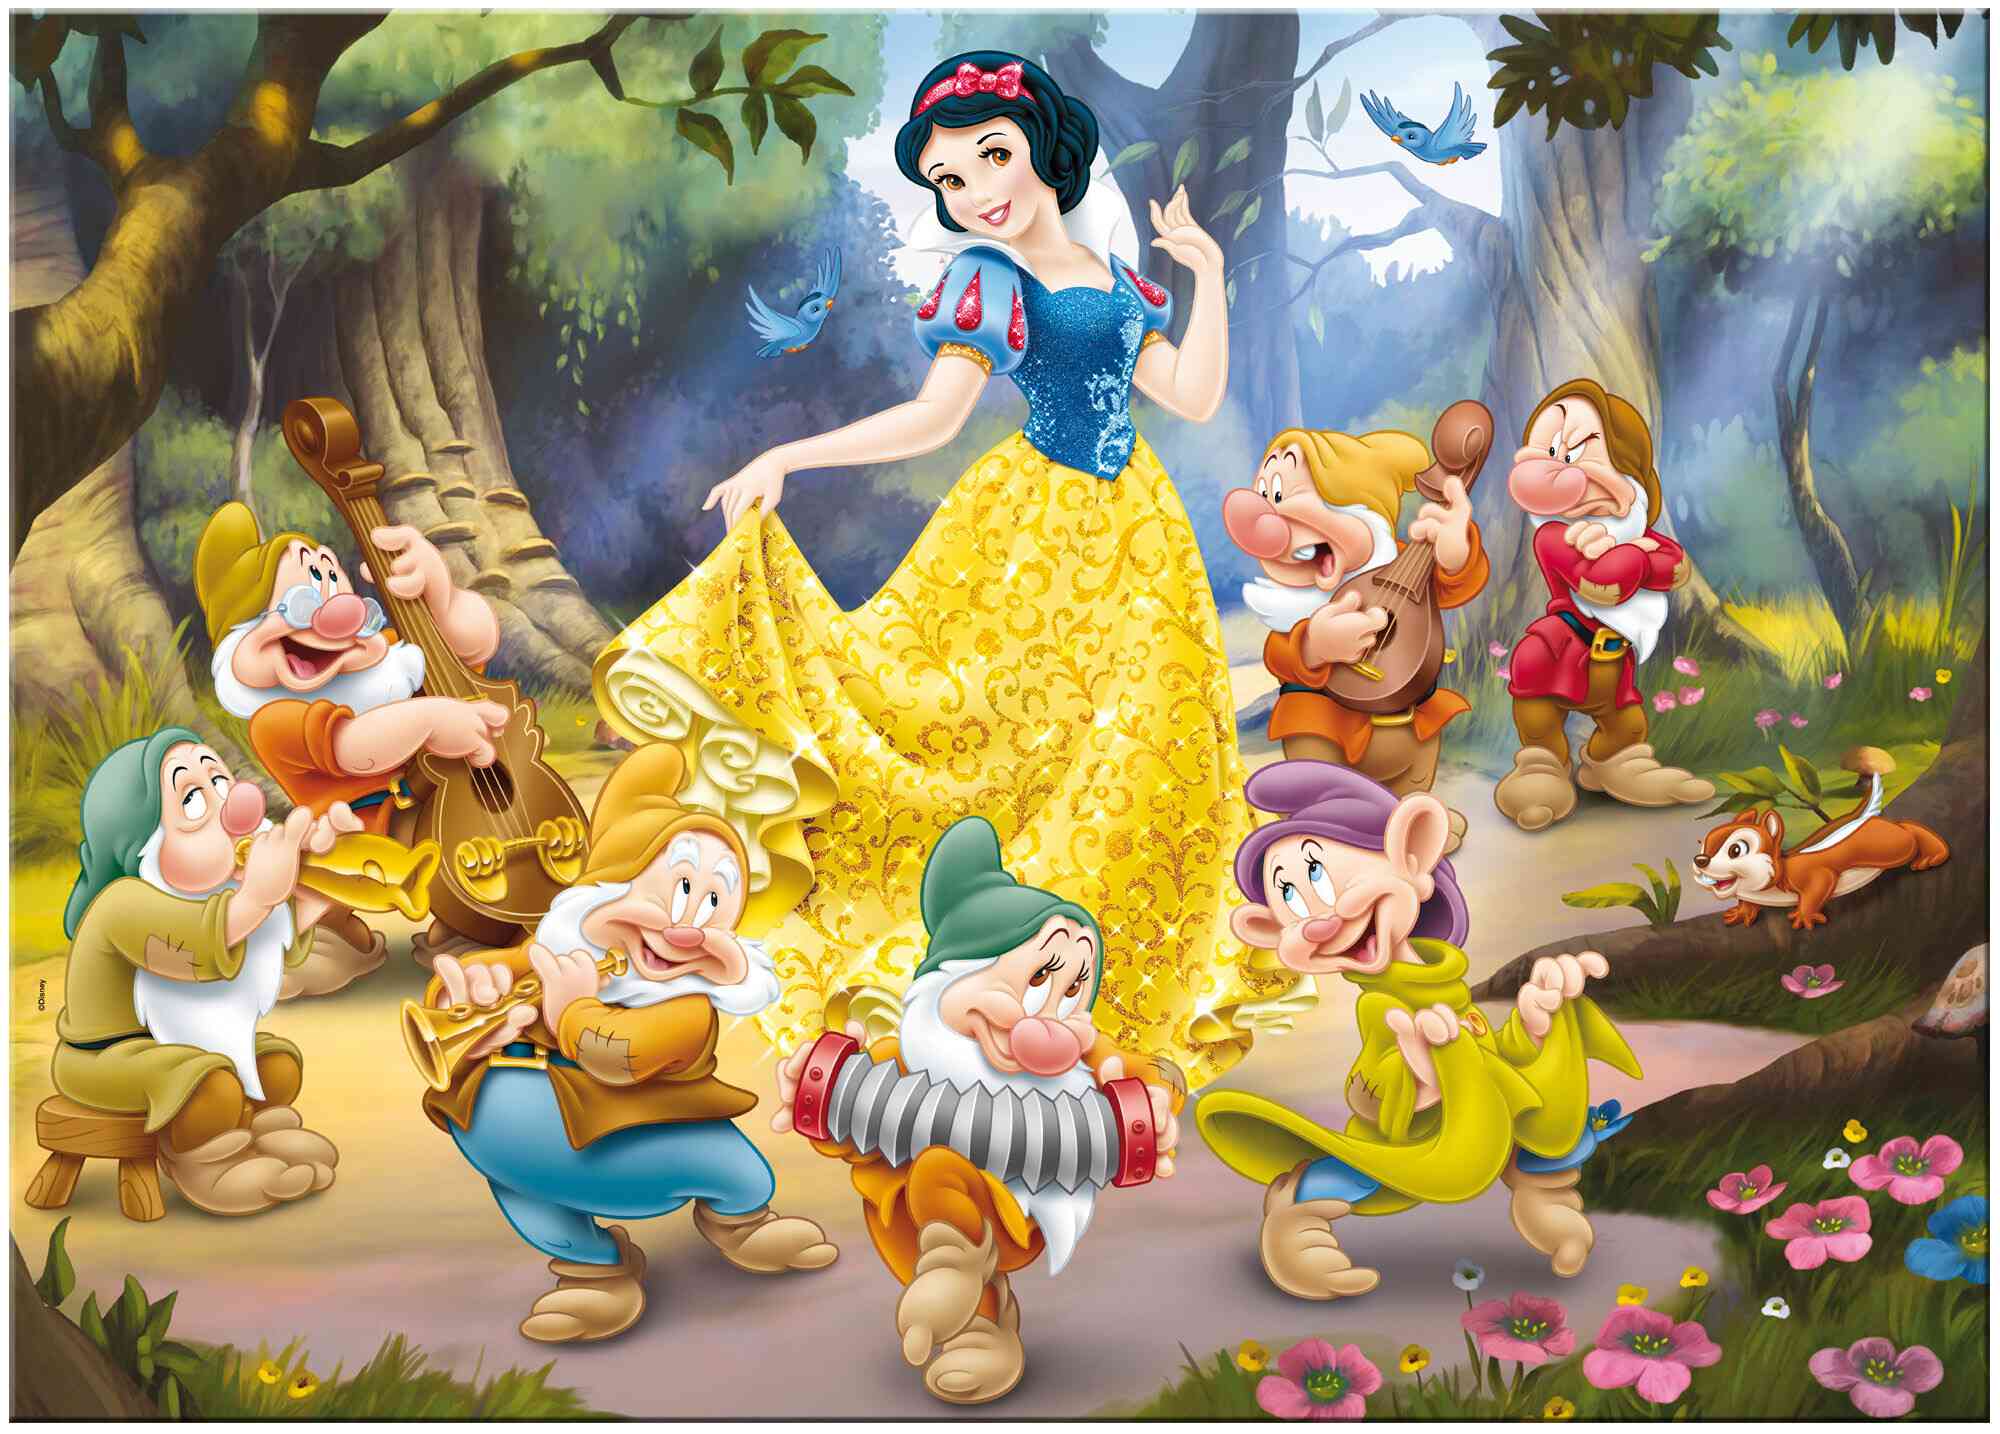 Disney puzzle df maxi floor 150 snow white - LISCIANI